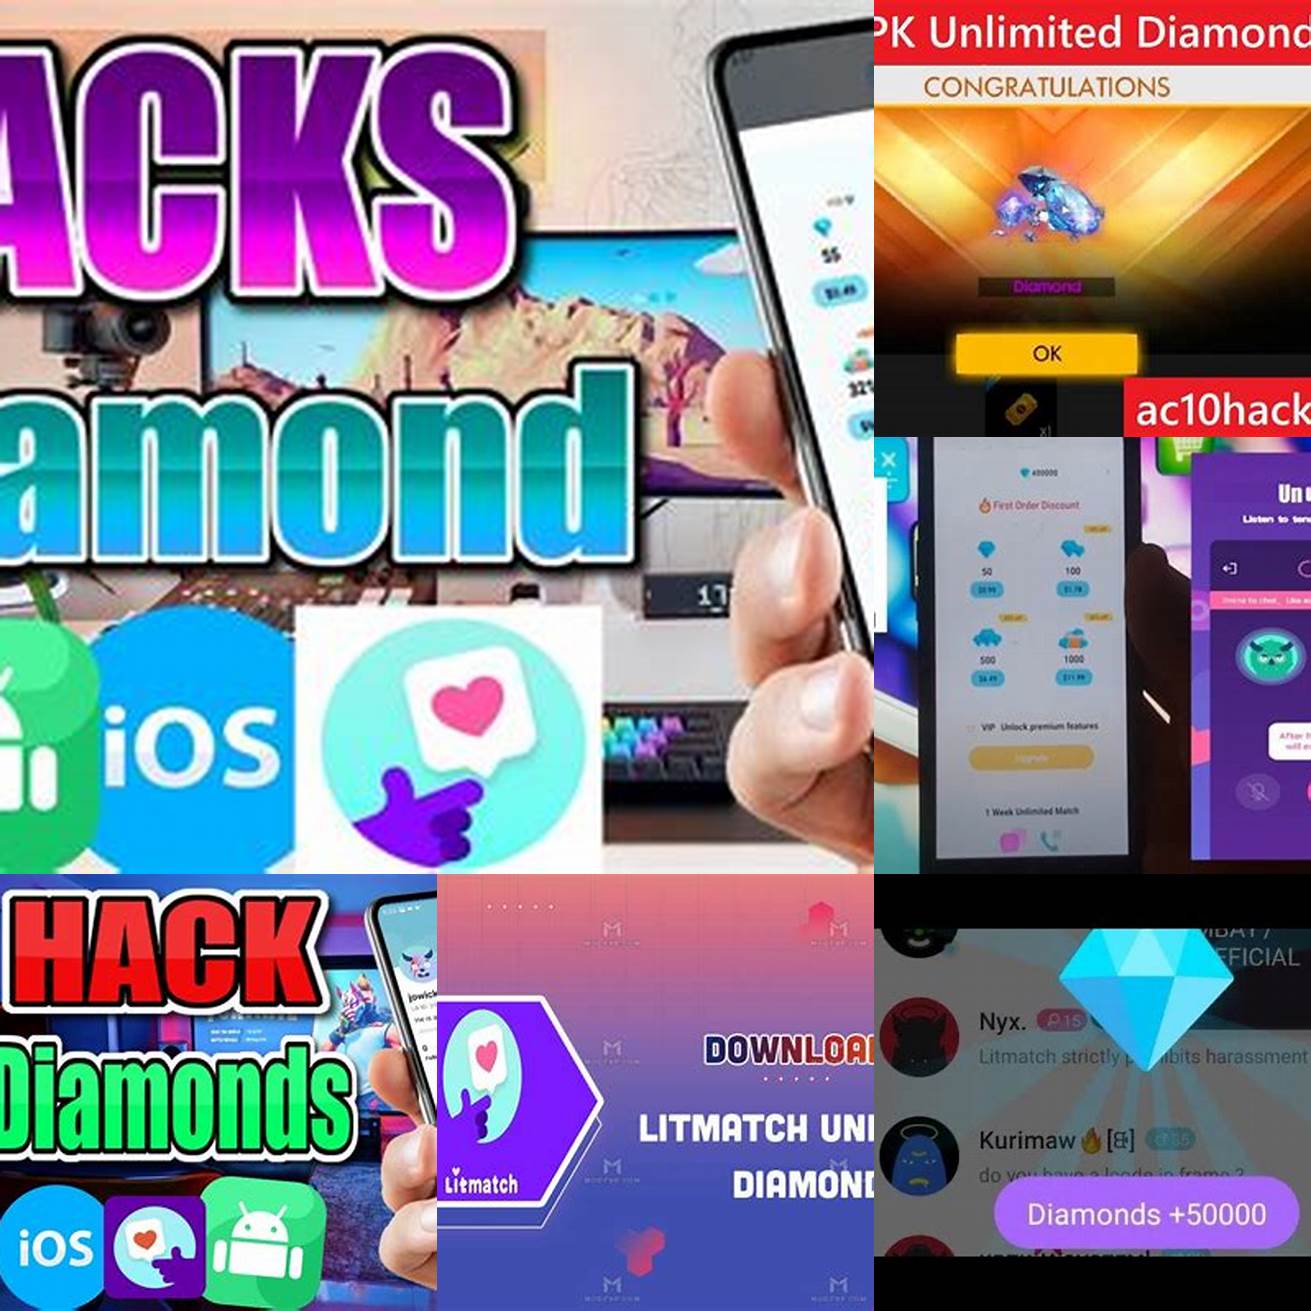 Akses gratis ke fitur premium Selain berlian tak terbatas Litmatch Mod Apk Unlimited Diamond juga memberikan akses gratis ke fitur premium di aplikasi Litmatch